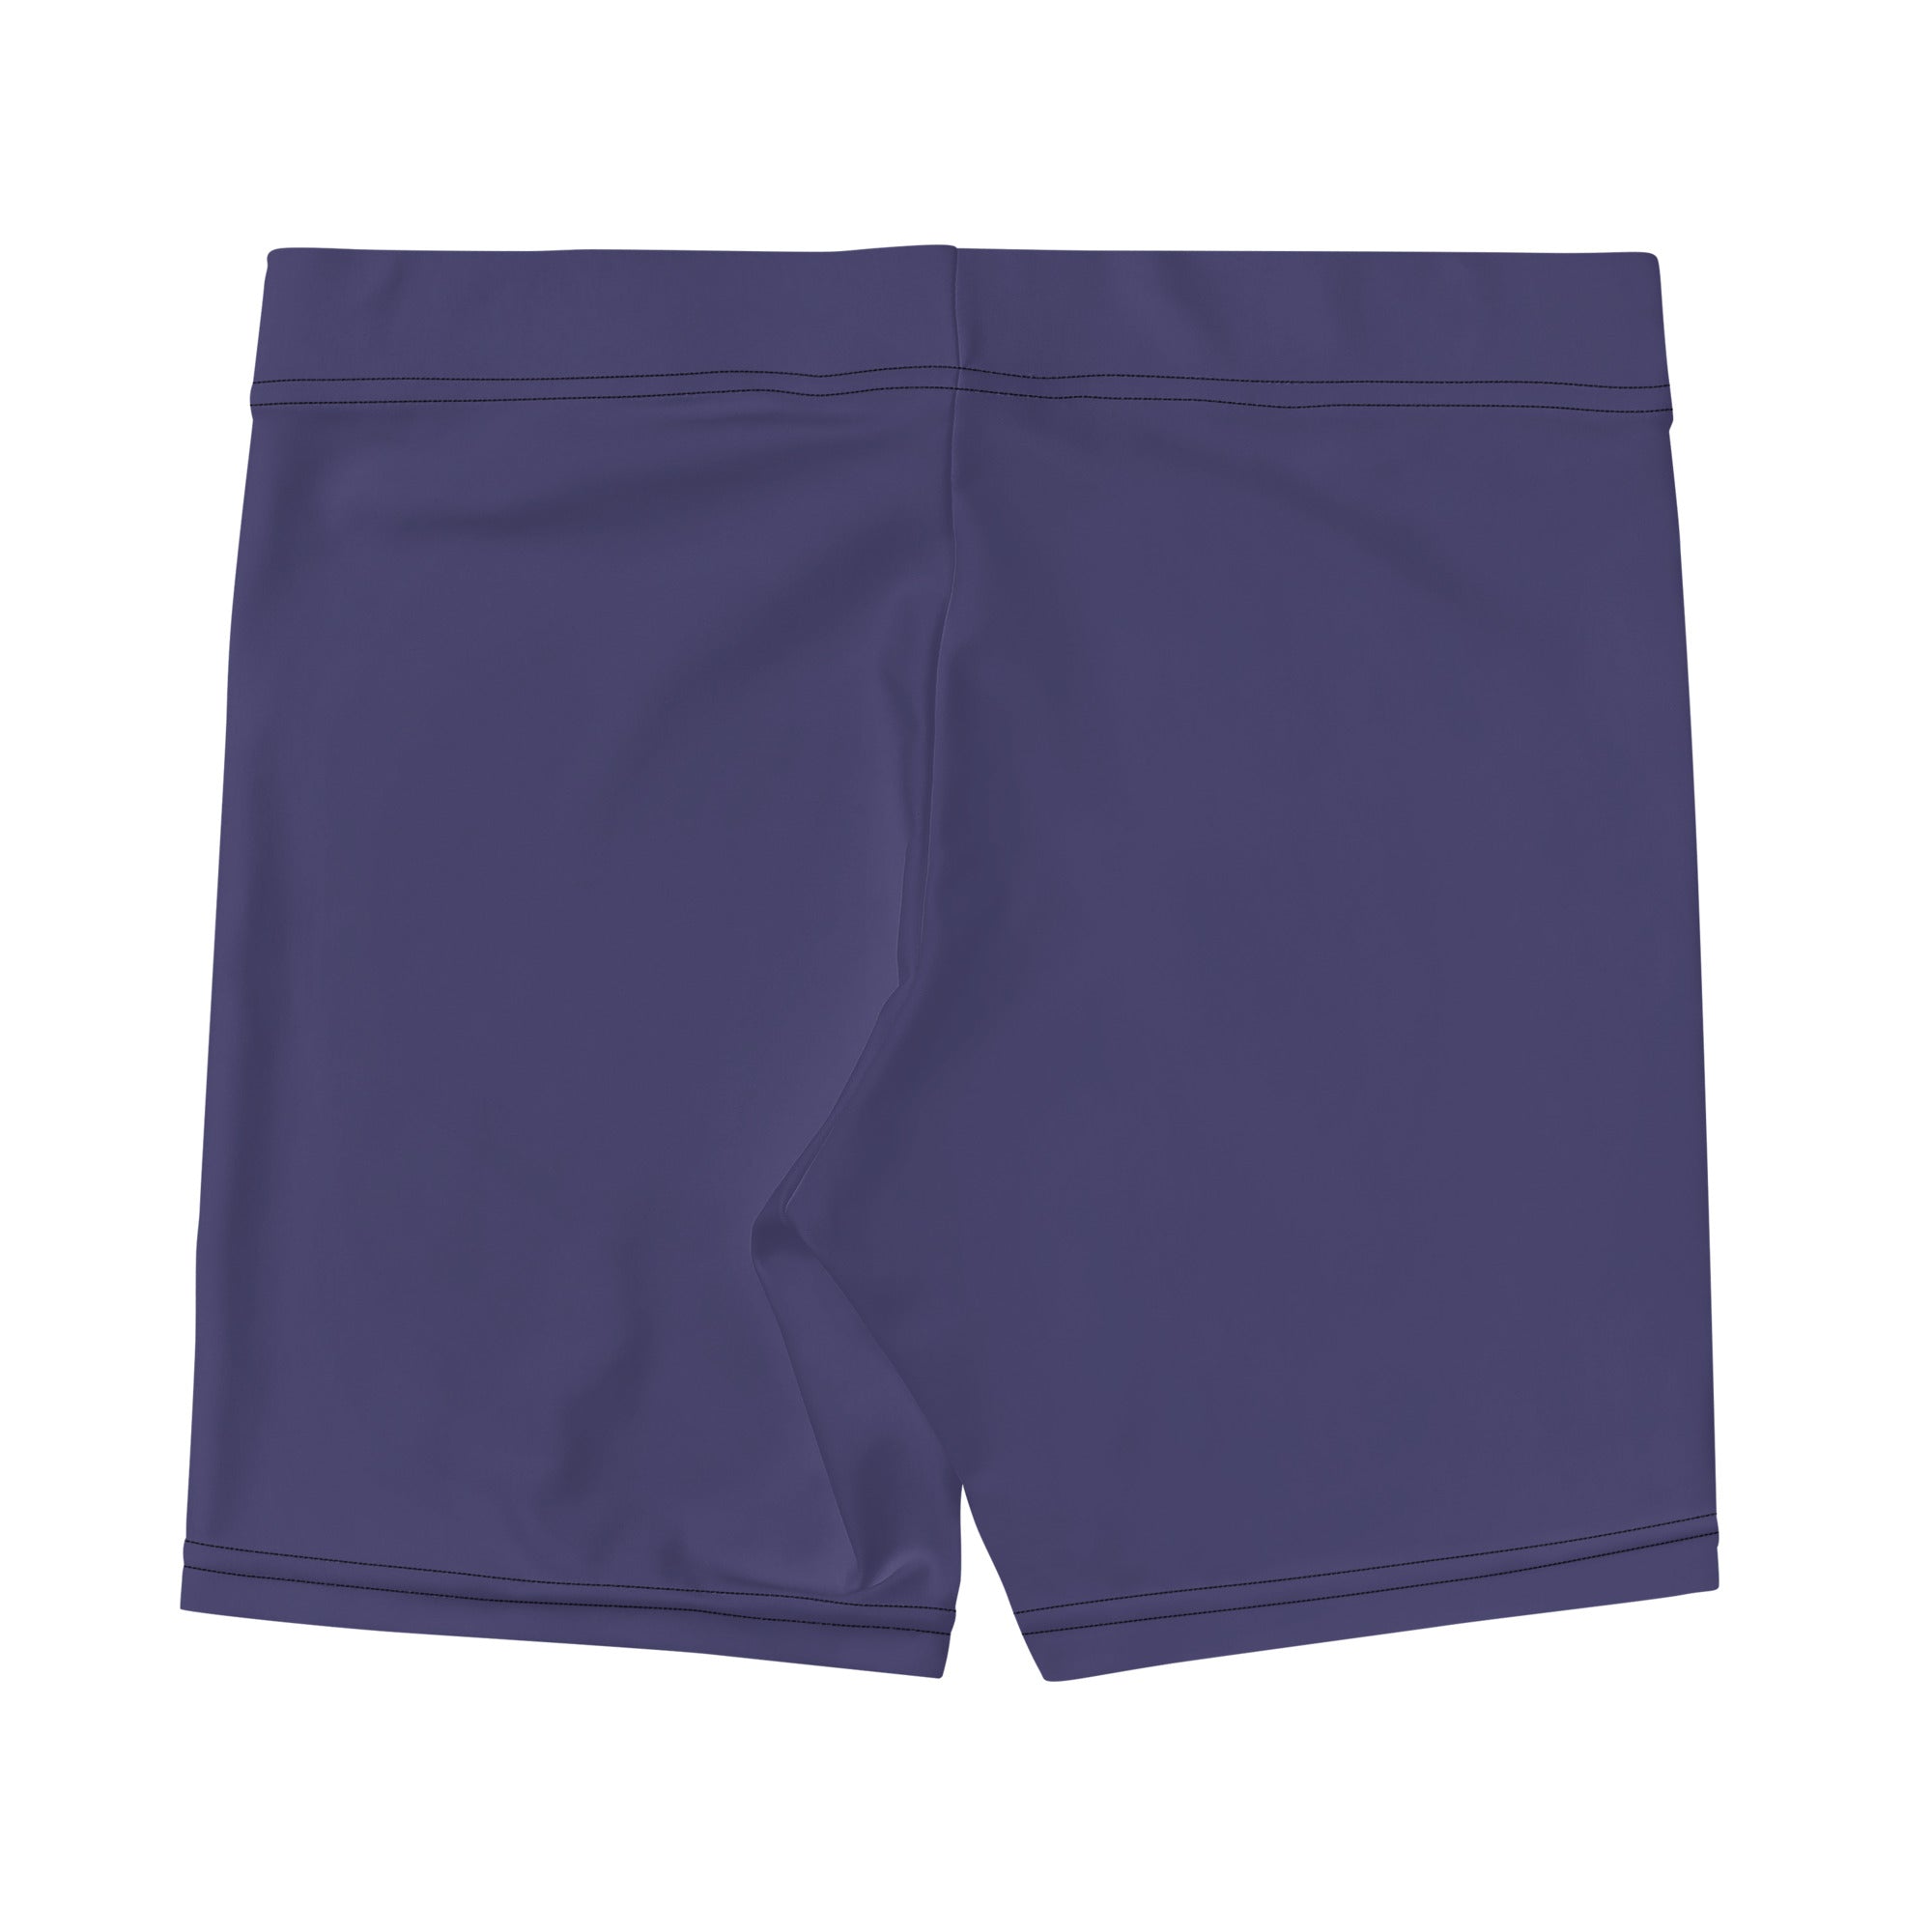 Corn Flower Blue Gym Shorts - Women's Gym Shorts - DRAGON FOXX™ - Corn Flower Blue Gym Shorts - 8990368_9296 - XS - Corn Flower Blue - Gym Shorts - Corn Flower Blue - Corn Flower Blue Gym Shorts - Dragon Foxx™